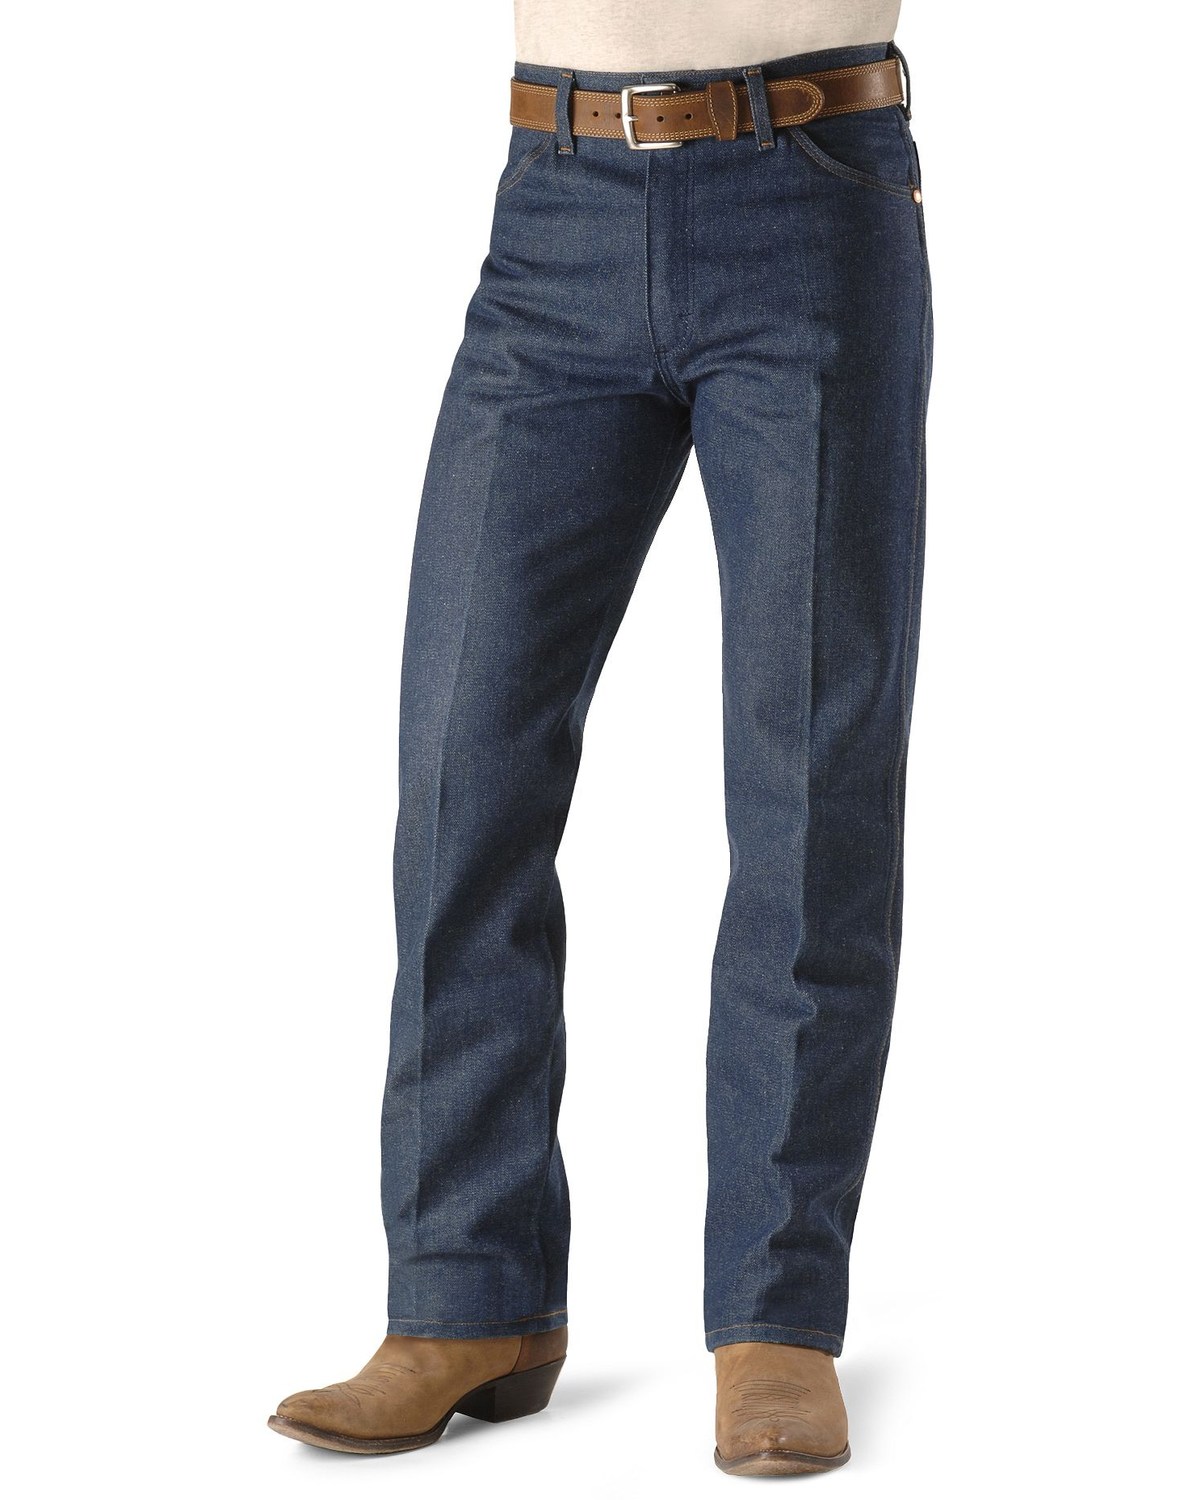 Wrangler Men's Original Fit Rigid Jeans | Boot Barn